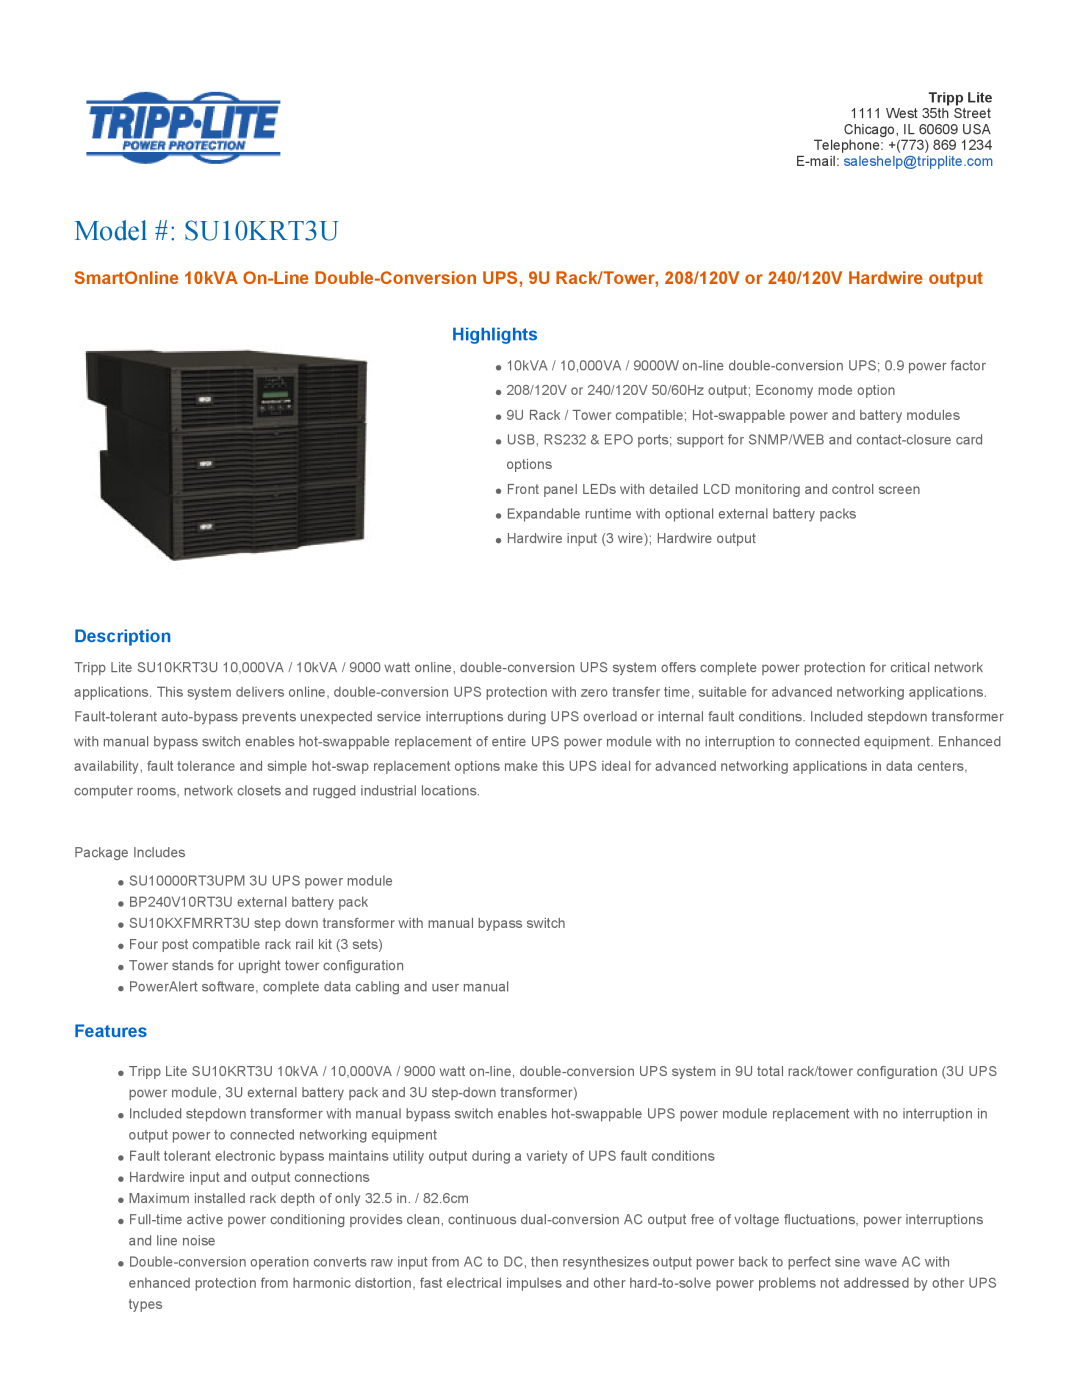 Tripp Lite user manual Highlights, Description, Features, Model # SU10KRT3U 